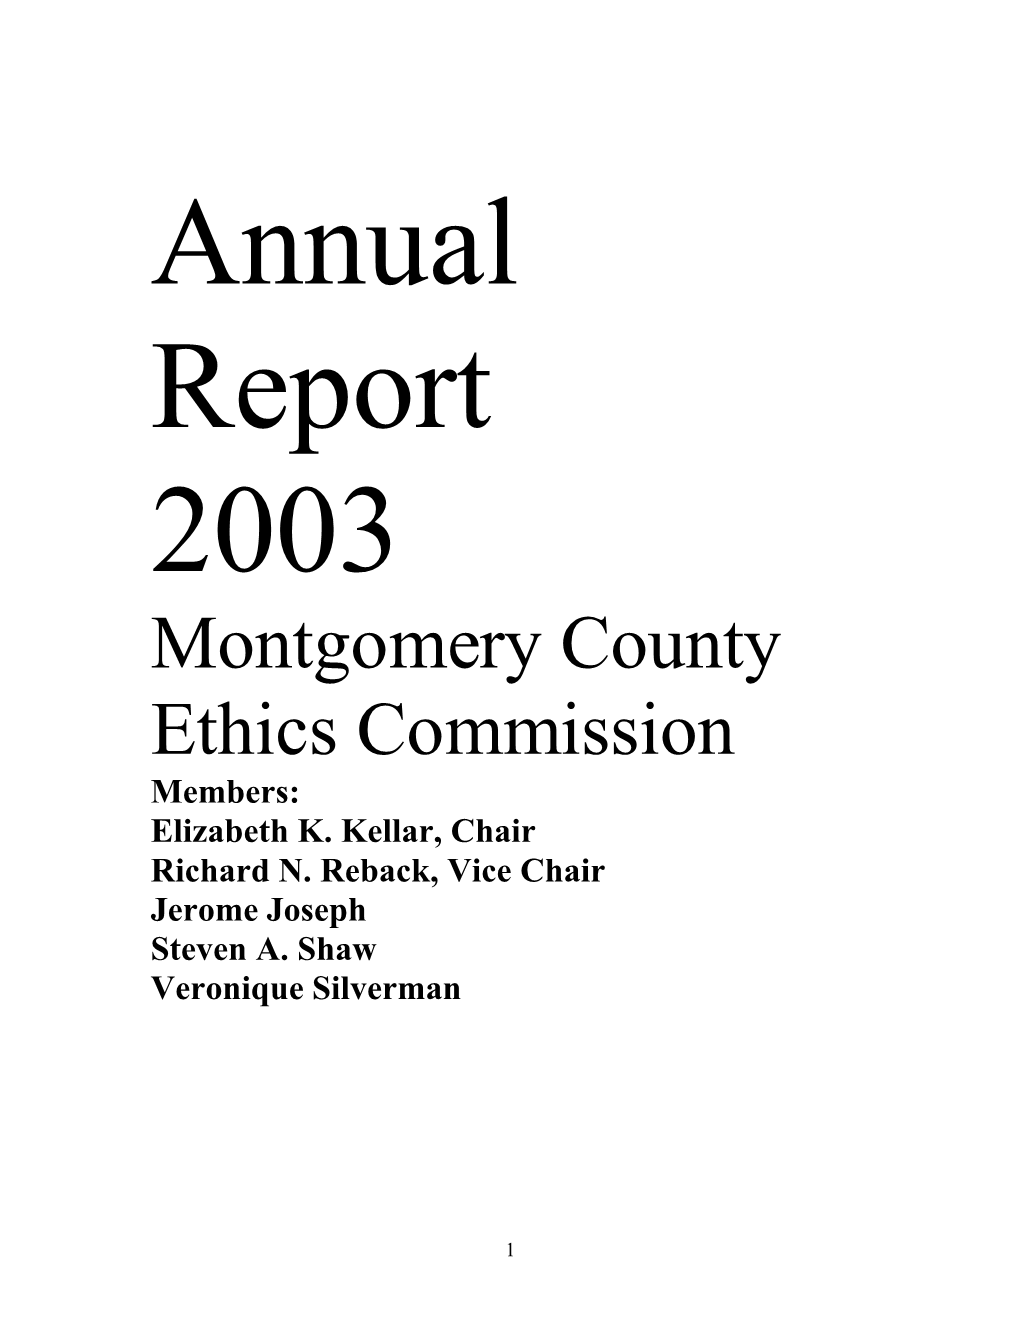 Montgomery County Ethics Commission Members: Elizabeth K